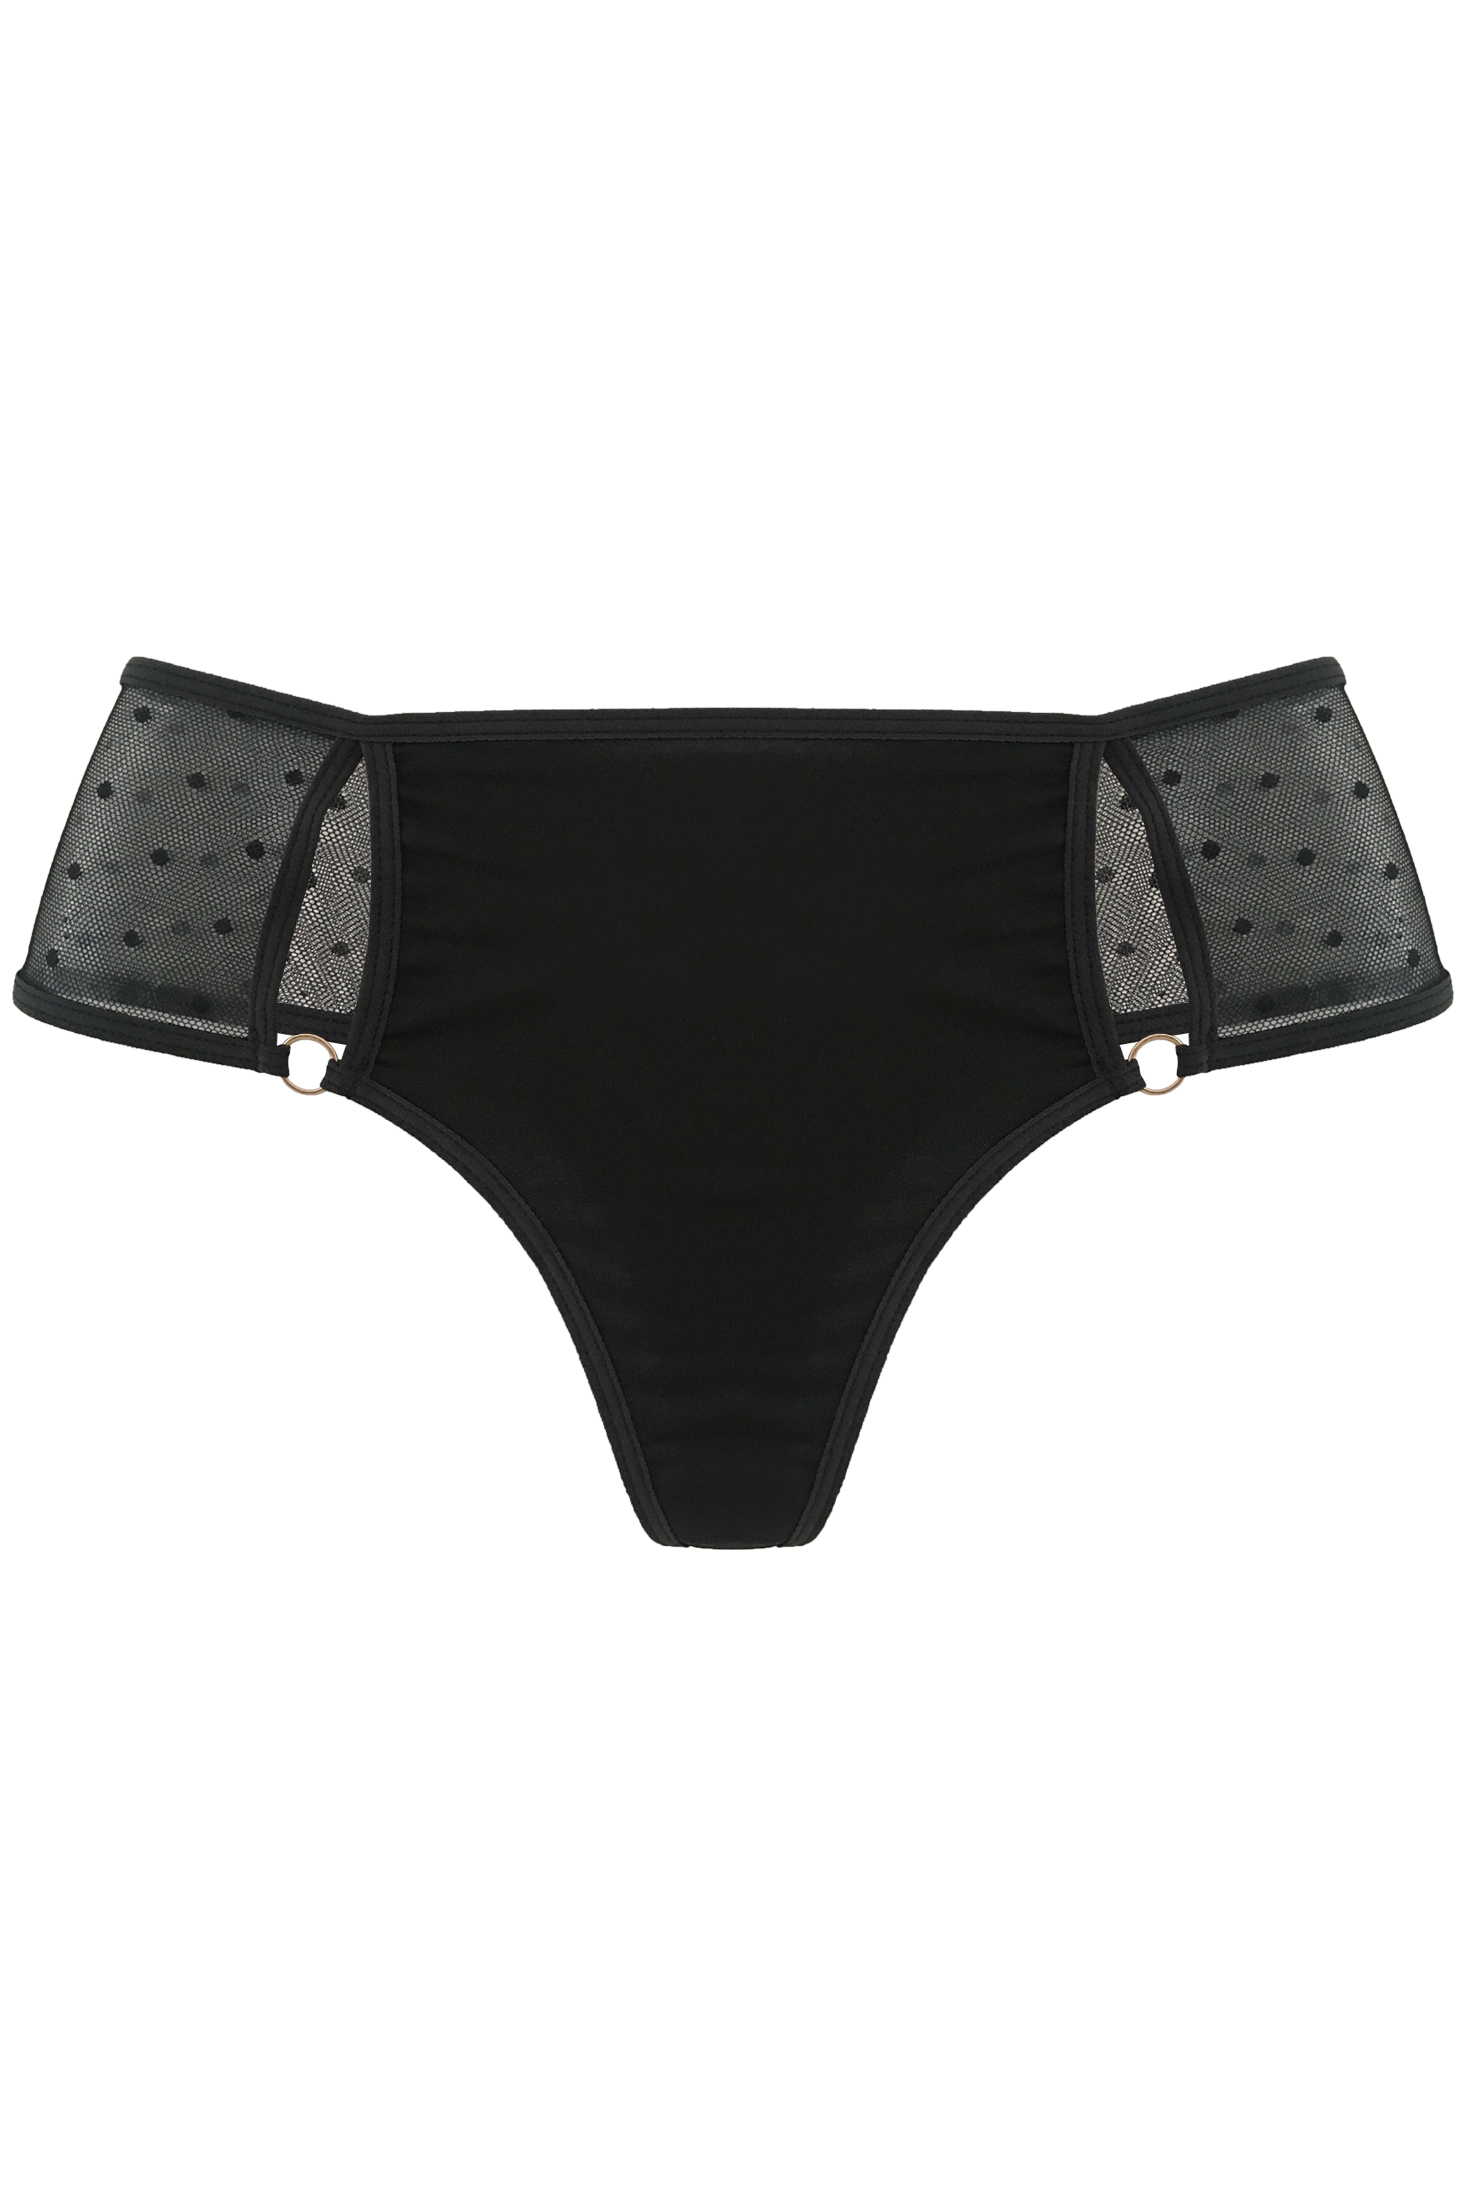 Lingerie Letters Cheeky Thong - Women's Underwear Online